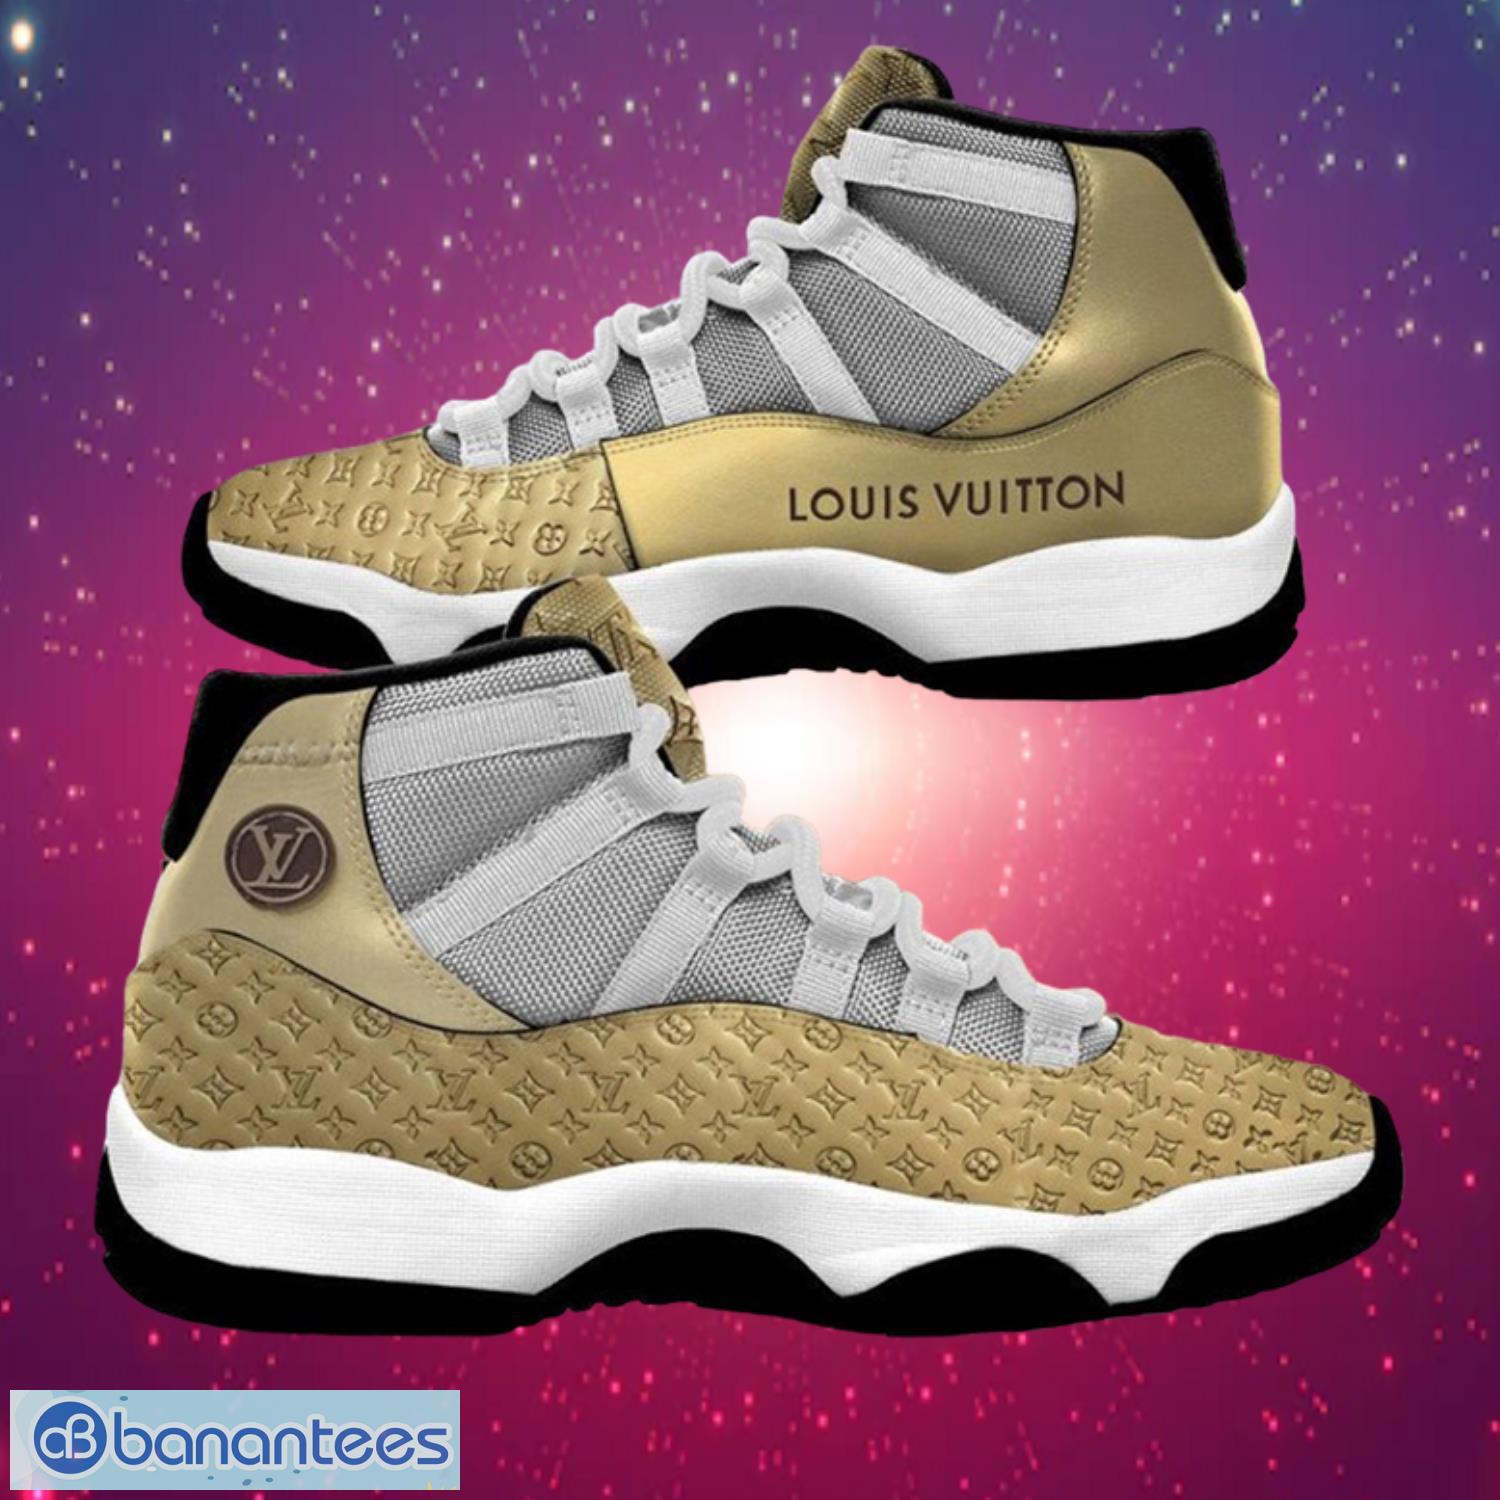 Louis Vuitton Light Style LV Air Jordan 11 Shoes - Banantees